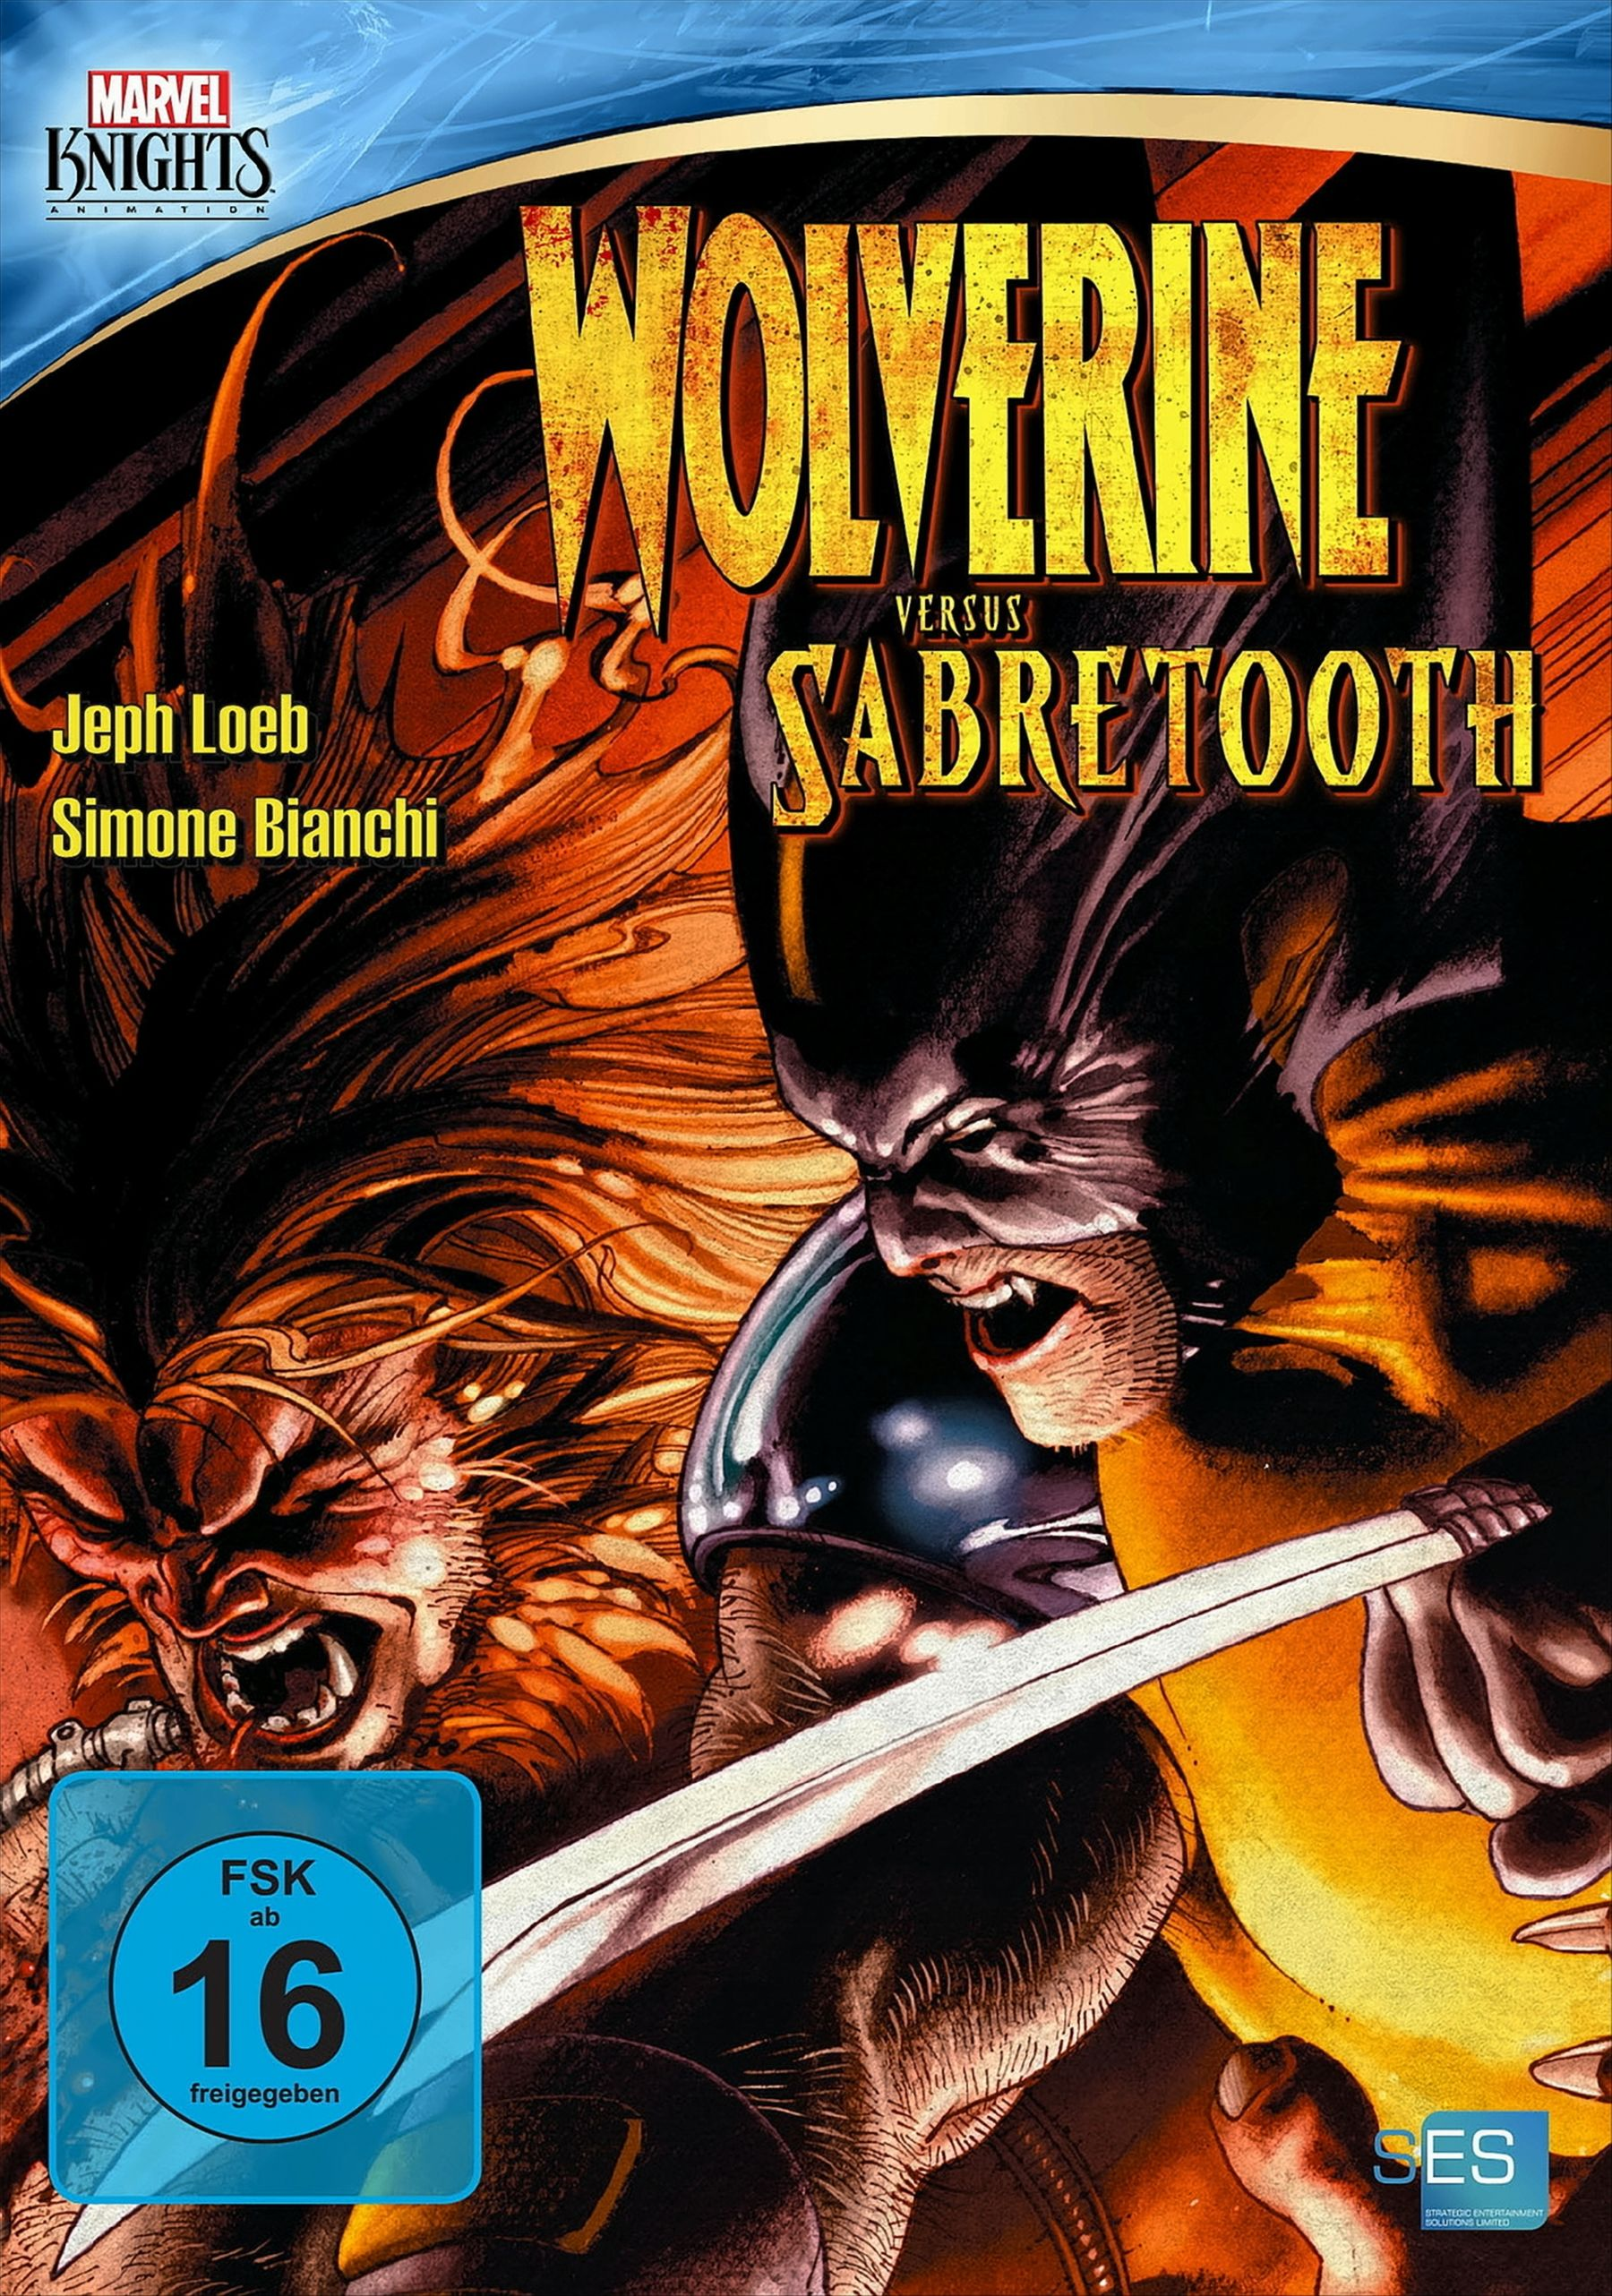 Marvel Knights - Wolverine versus DVD Sabertooth (OmU)